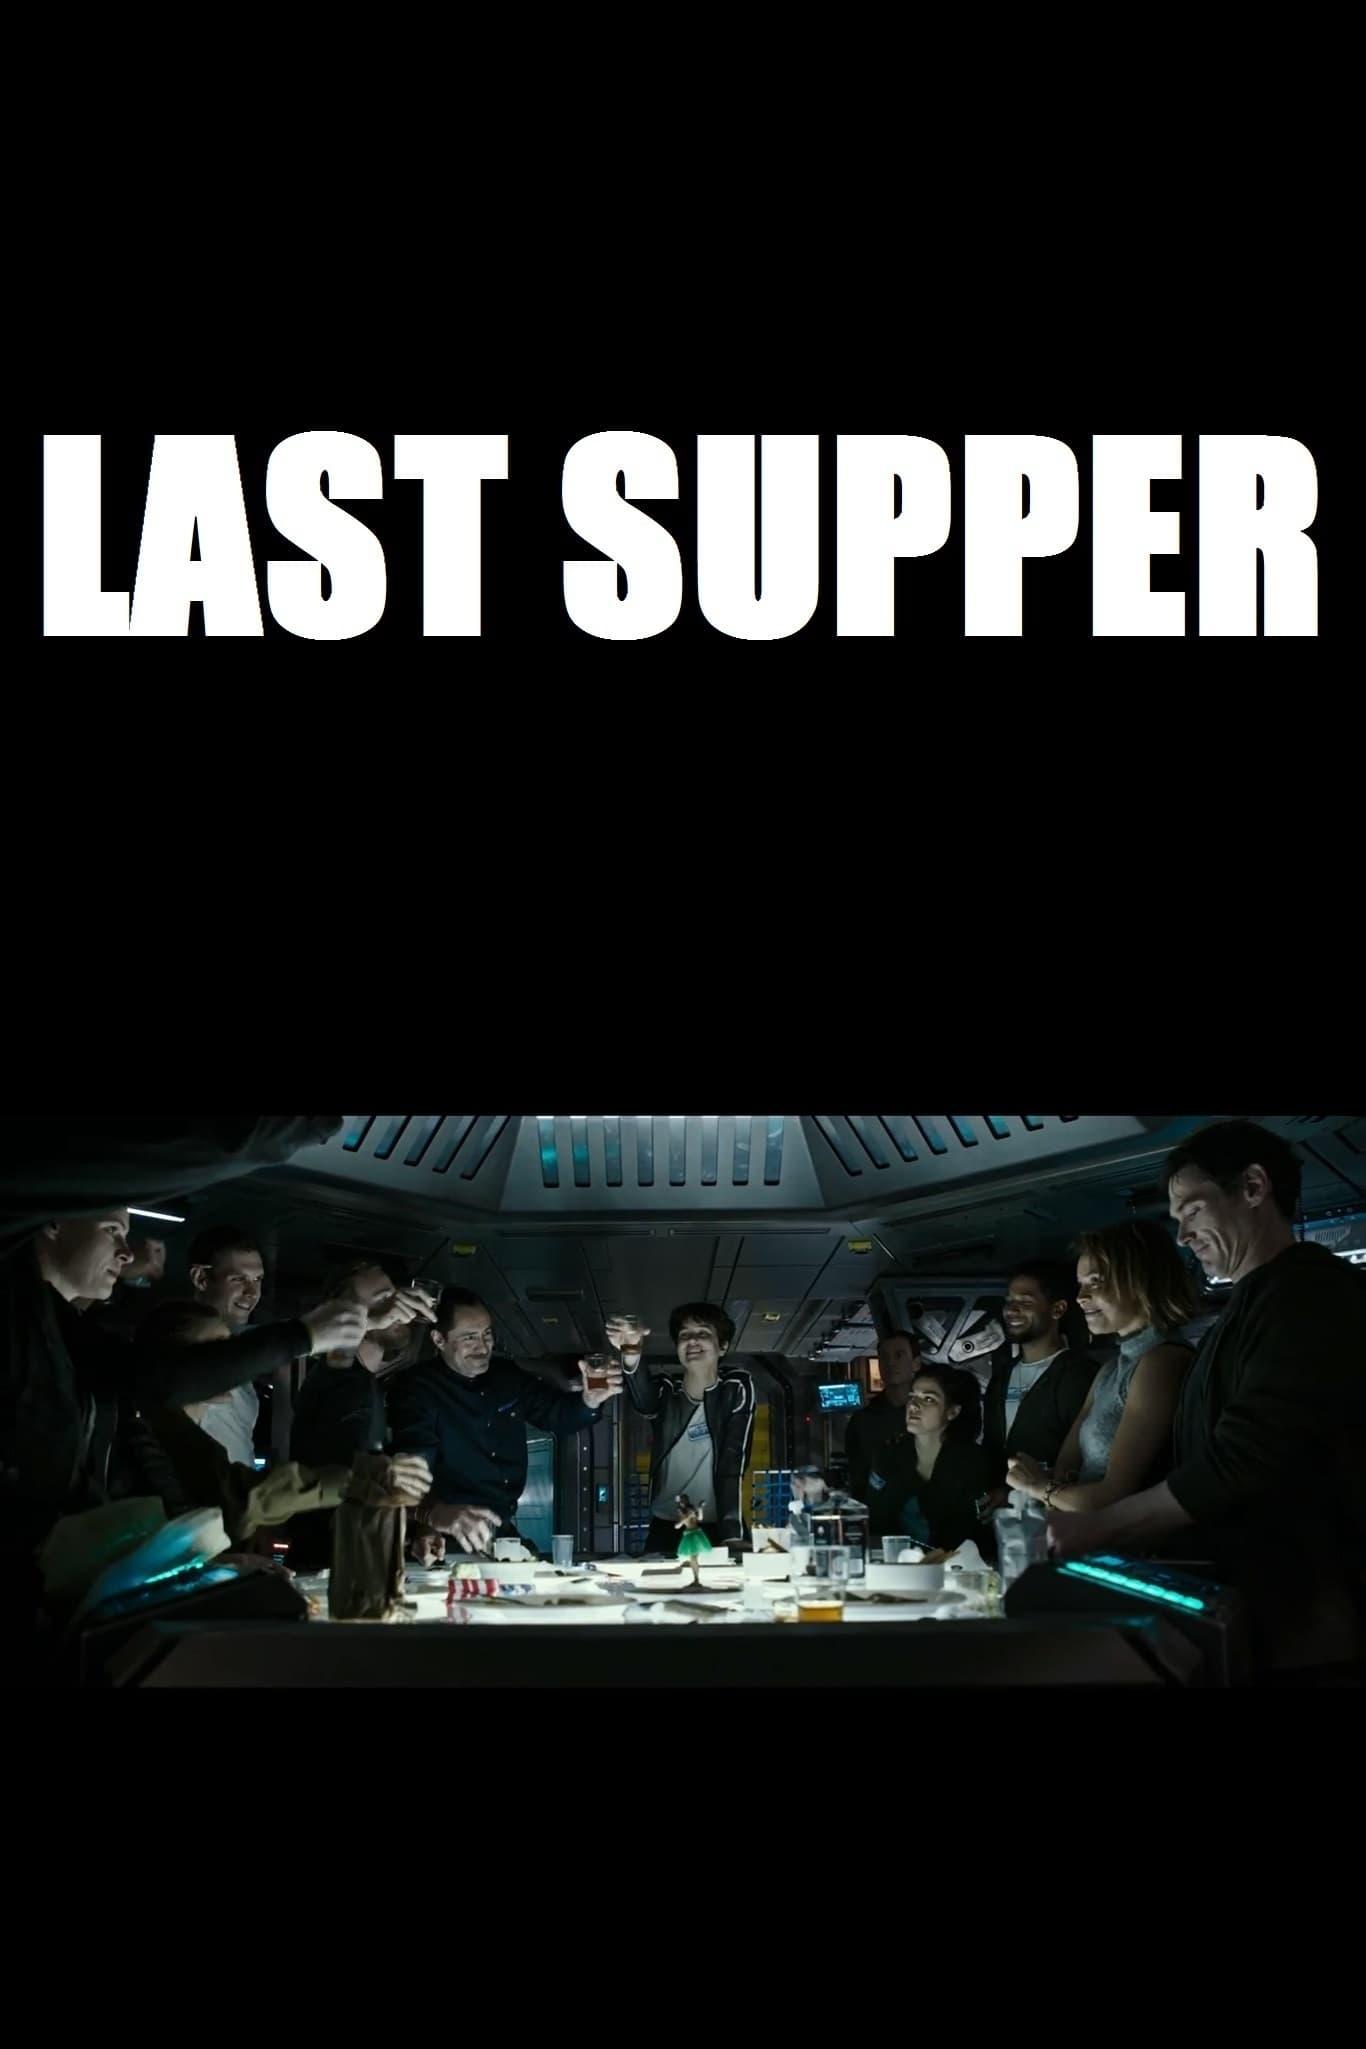 Alien: Covenant - Prologue: Last Supper poster